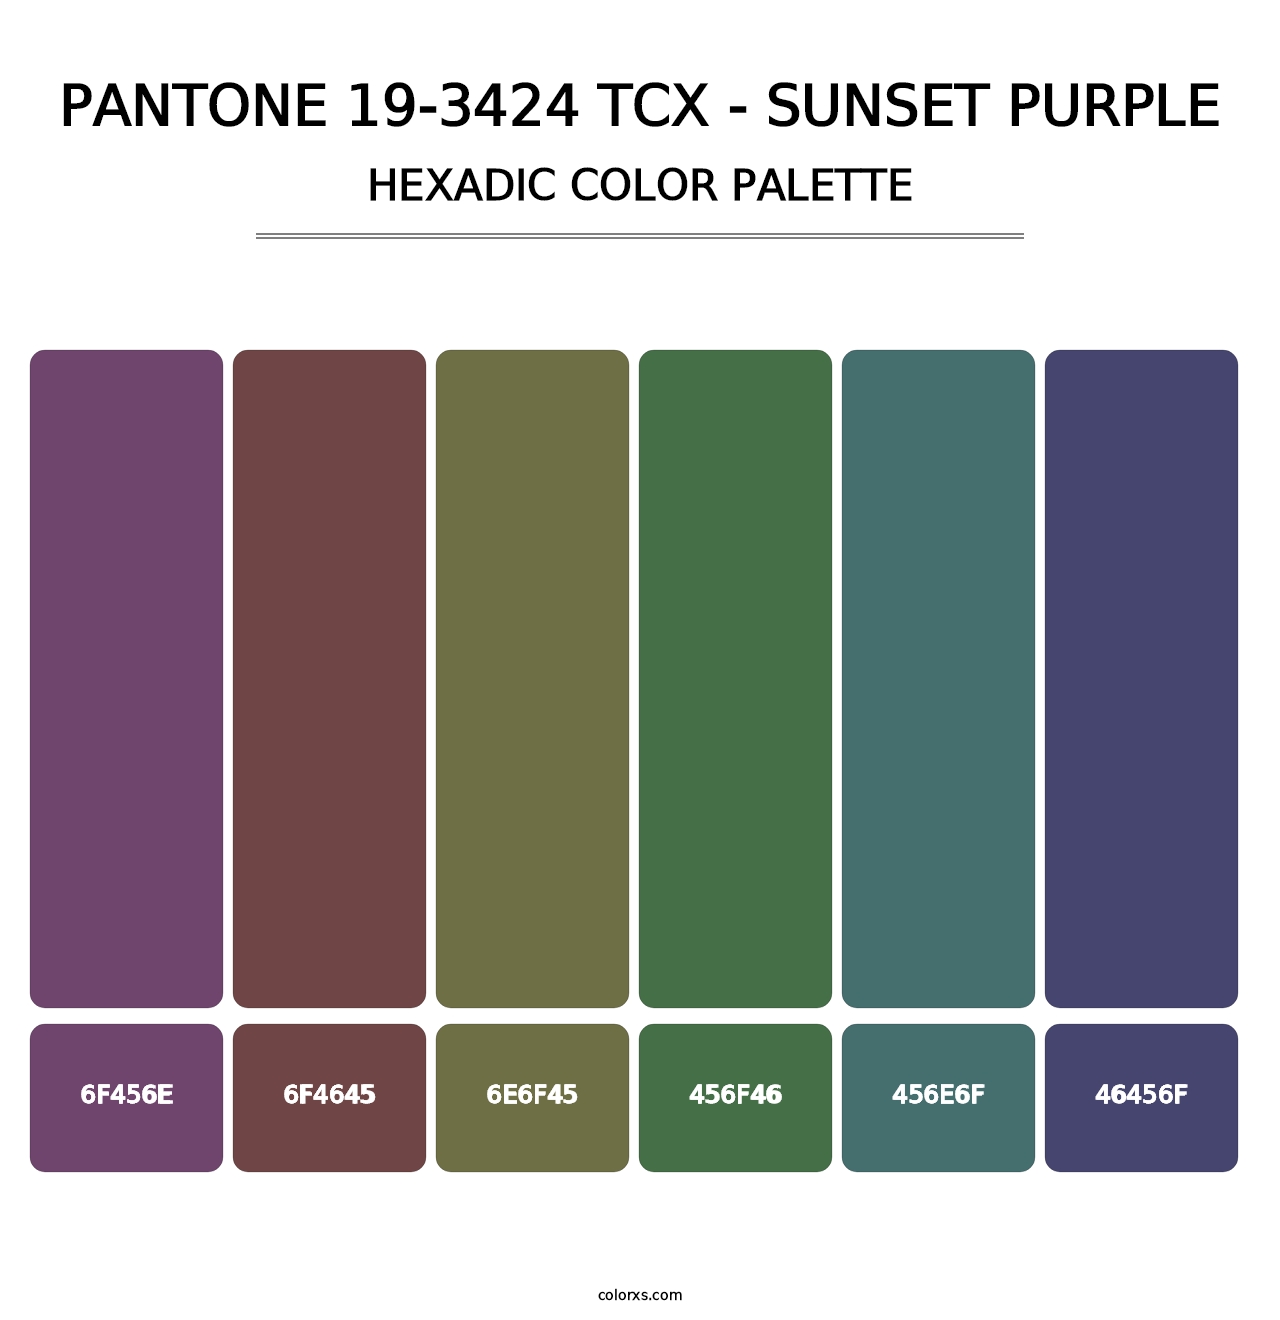 PANTONE 19-3424 TCX - Sunset Purple - Hexadic Color Palette